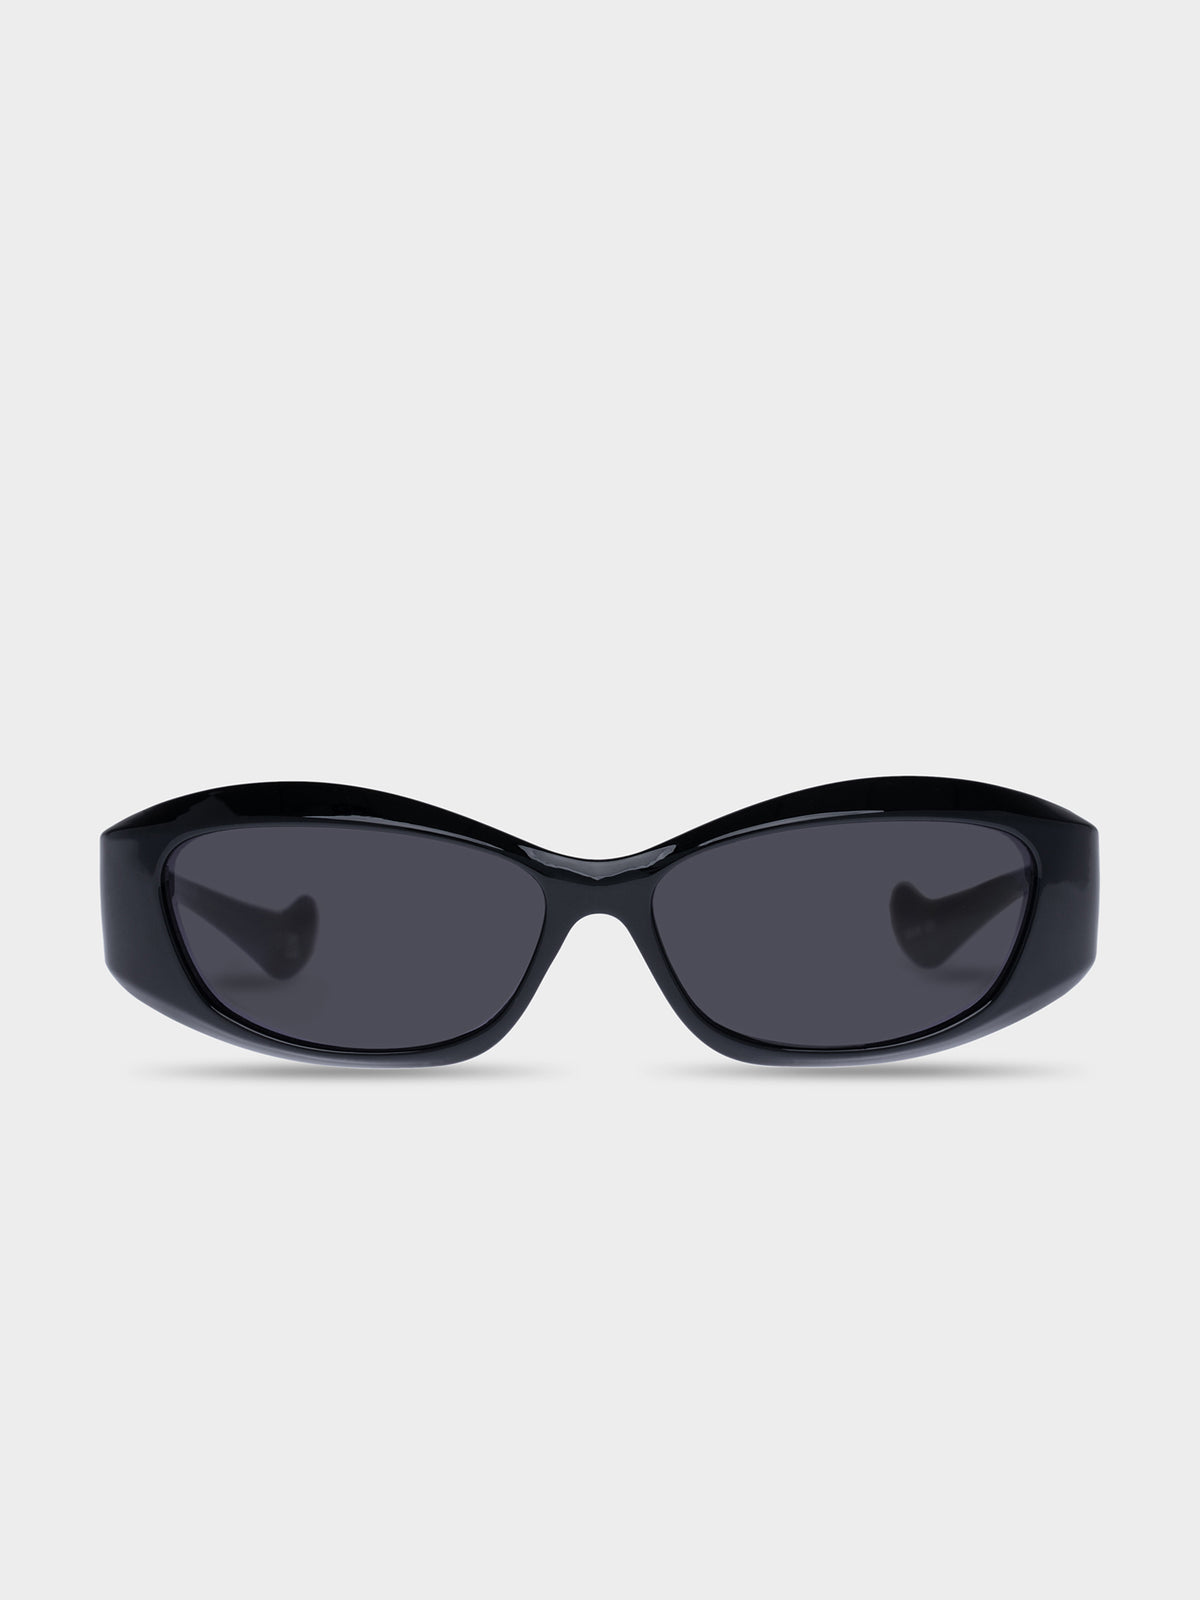 Swift Lust Sunglasses in Black &amp; Smoke